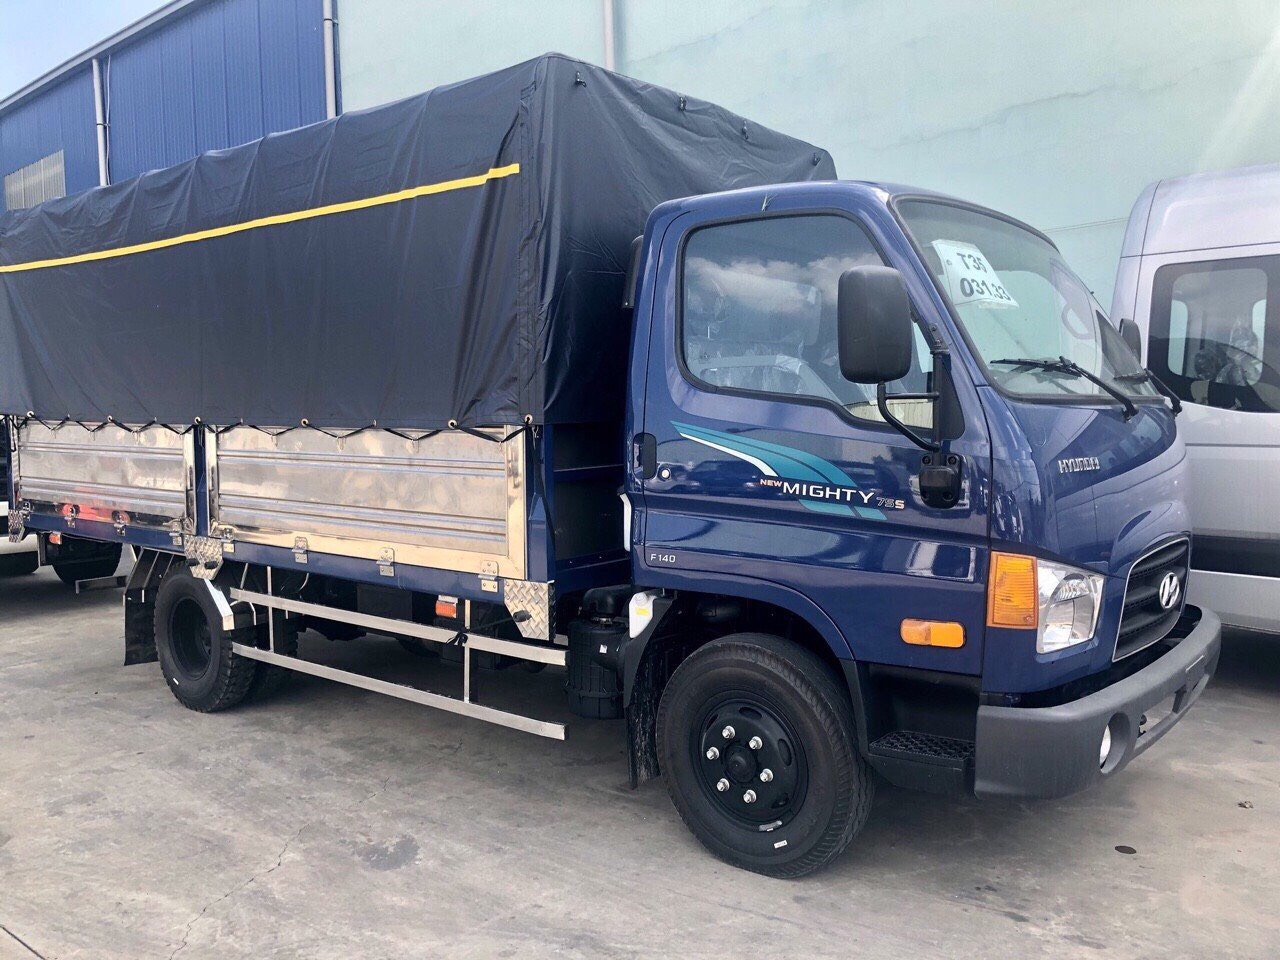 xe tải 3.5 tấn hyundai mighty 75s